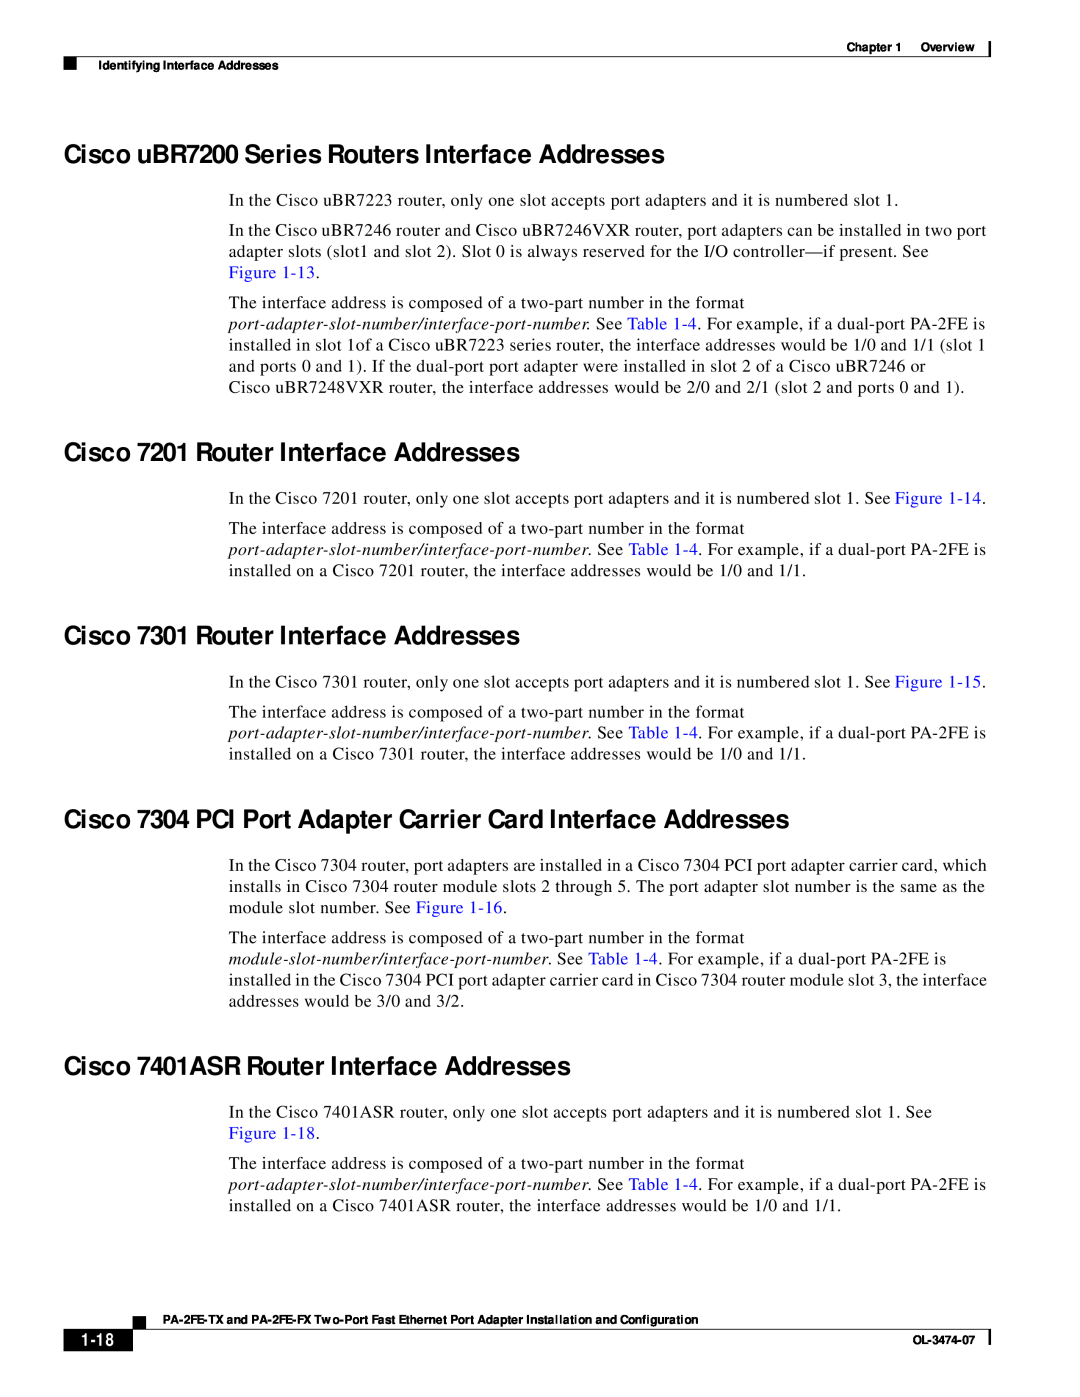 Cisco Systems PA-2FE-TX Cisco uBR7200 Series Routers Interface Addresses, Cisco 7201 Router Interface Addresses, 1-18 